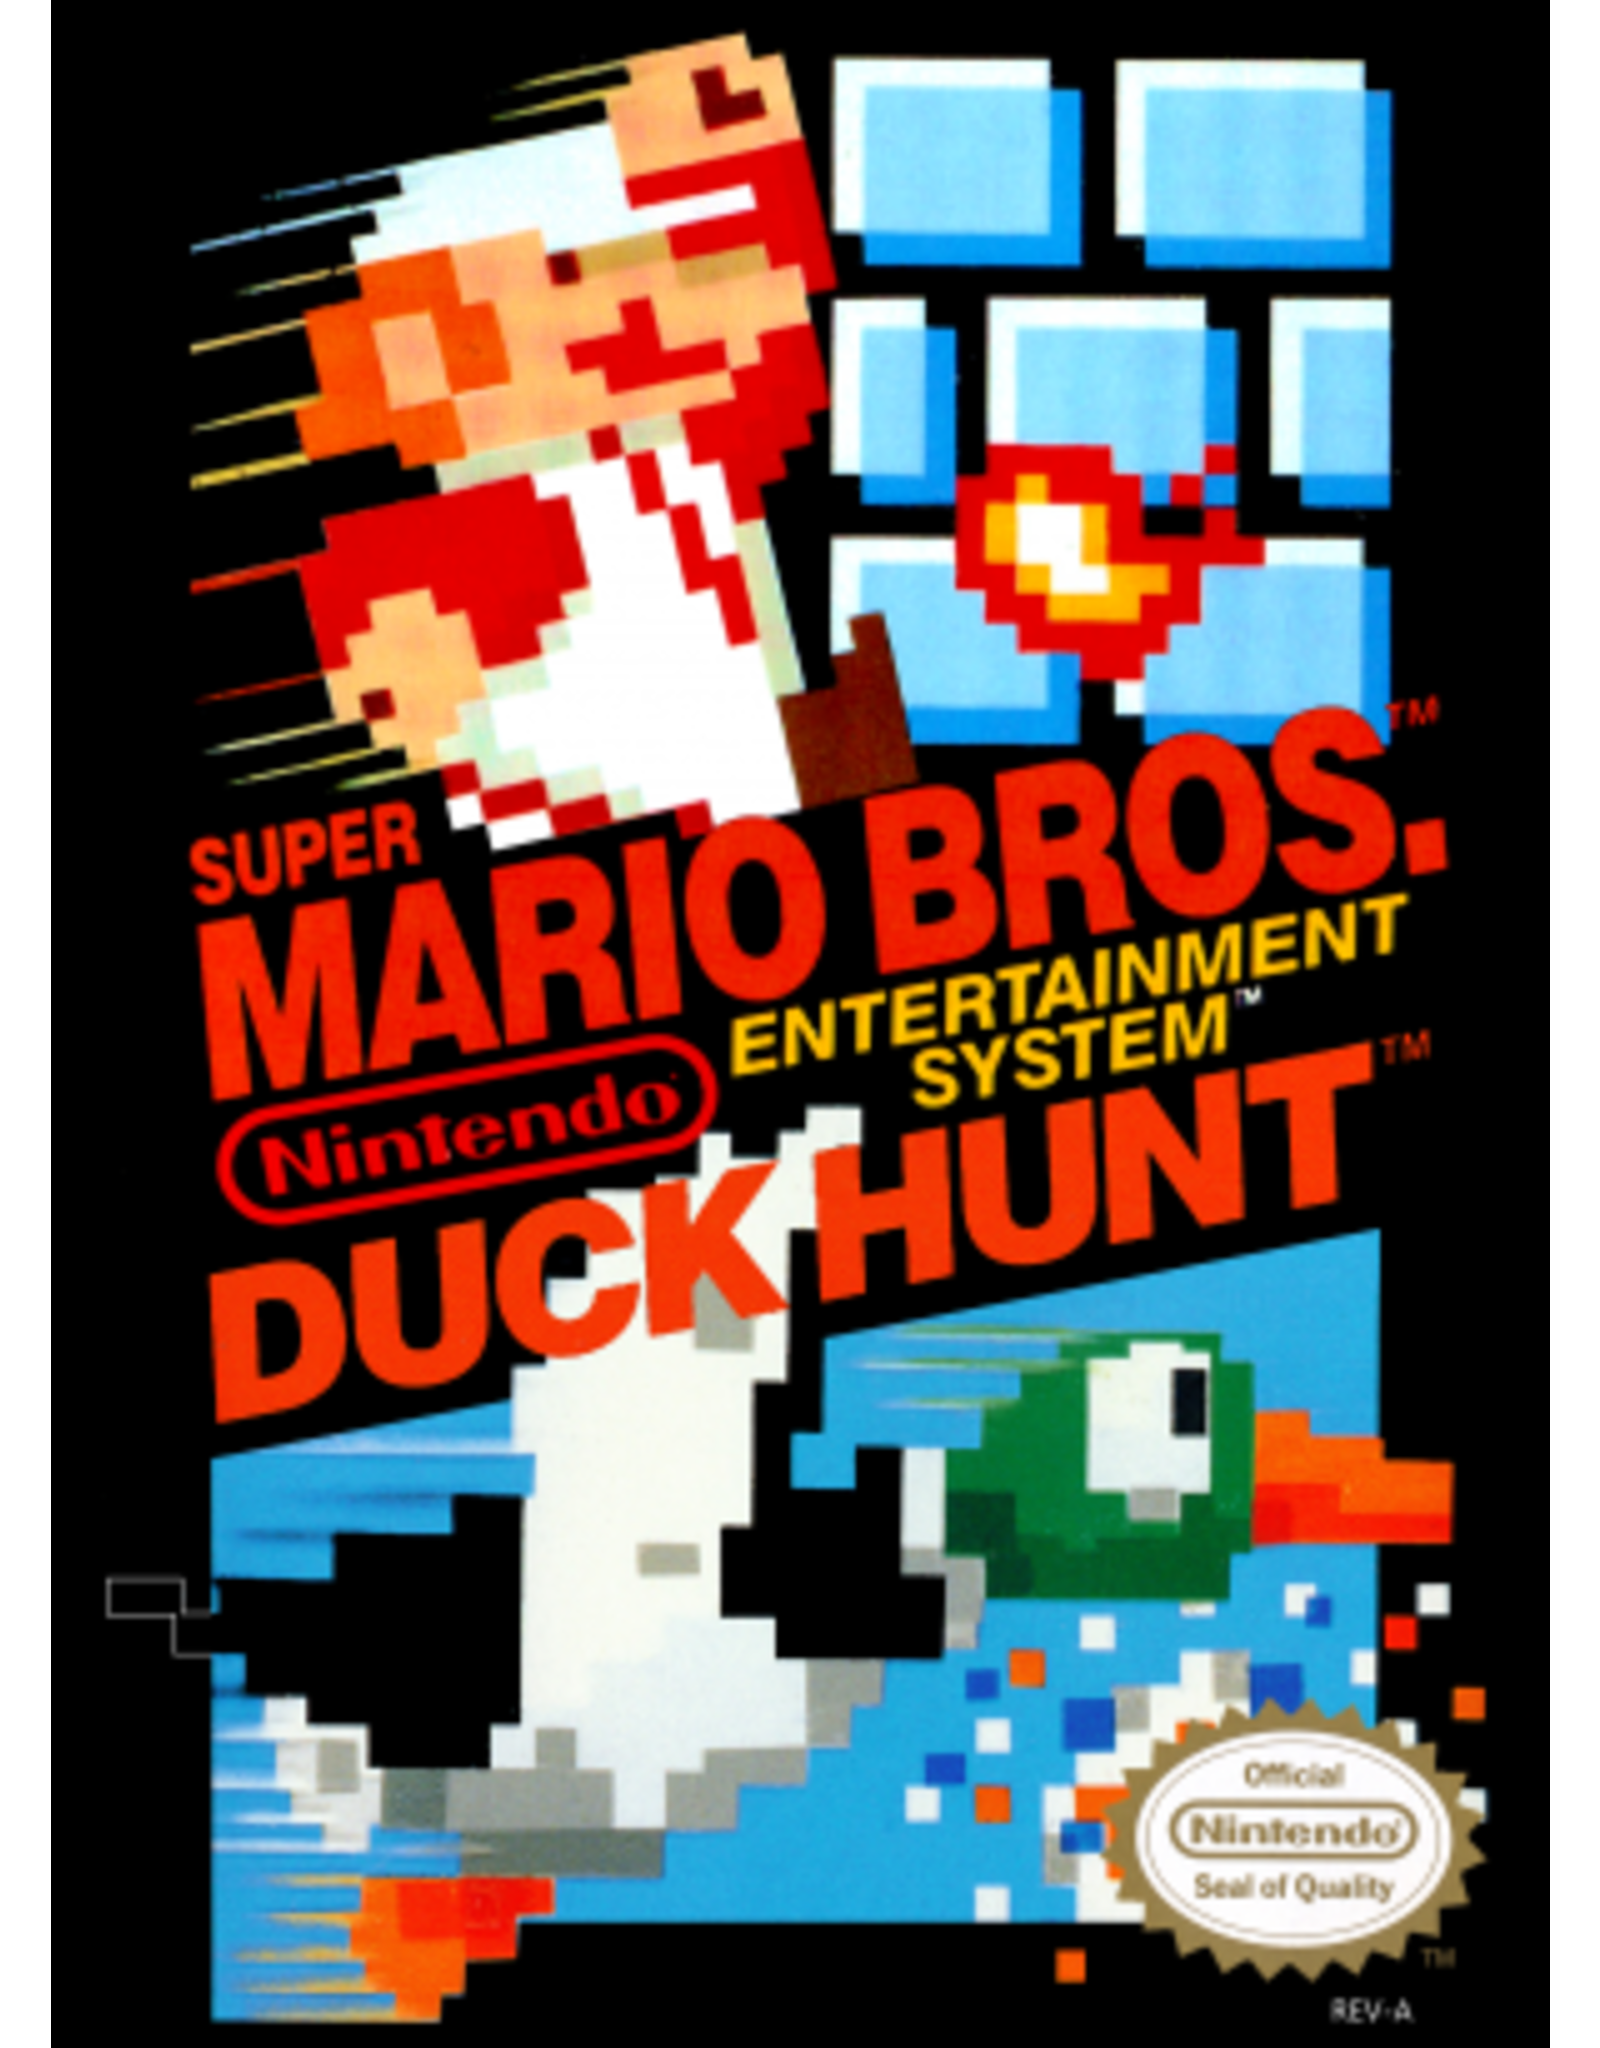 duck hunt and super mario bros